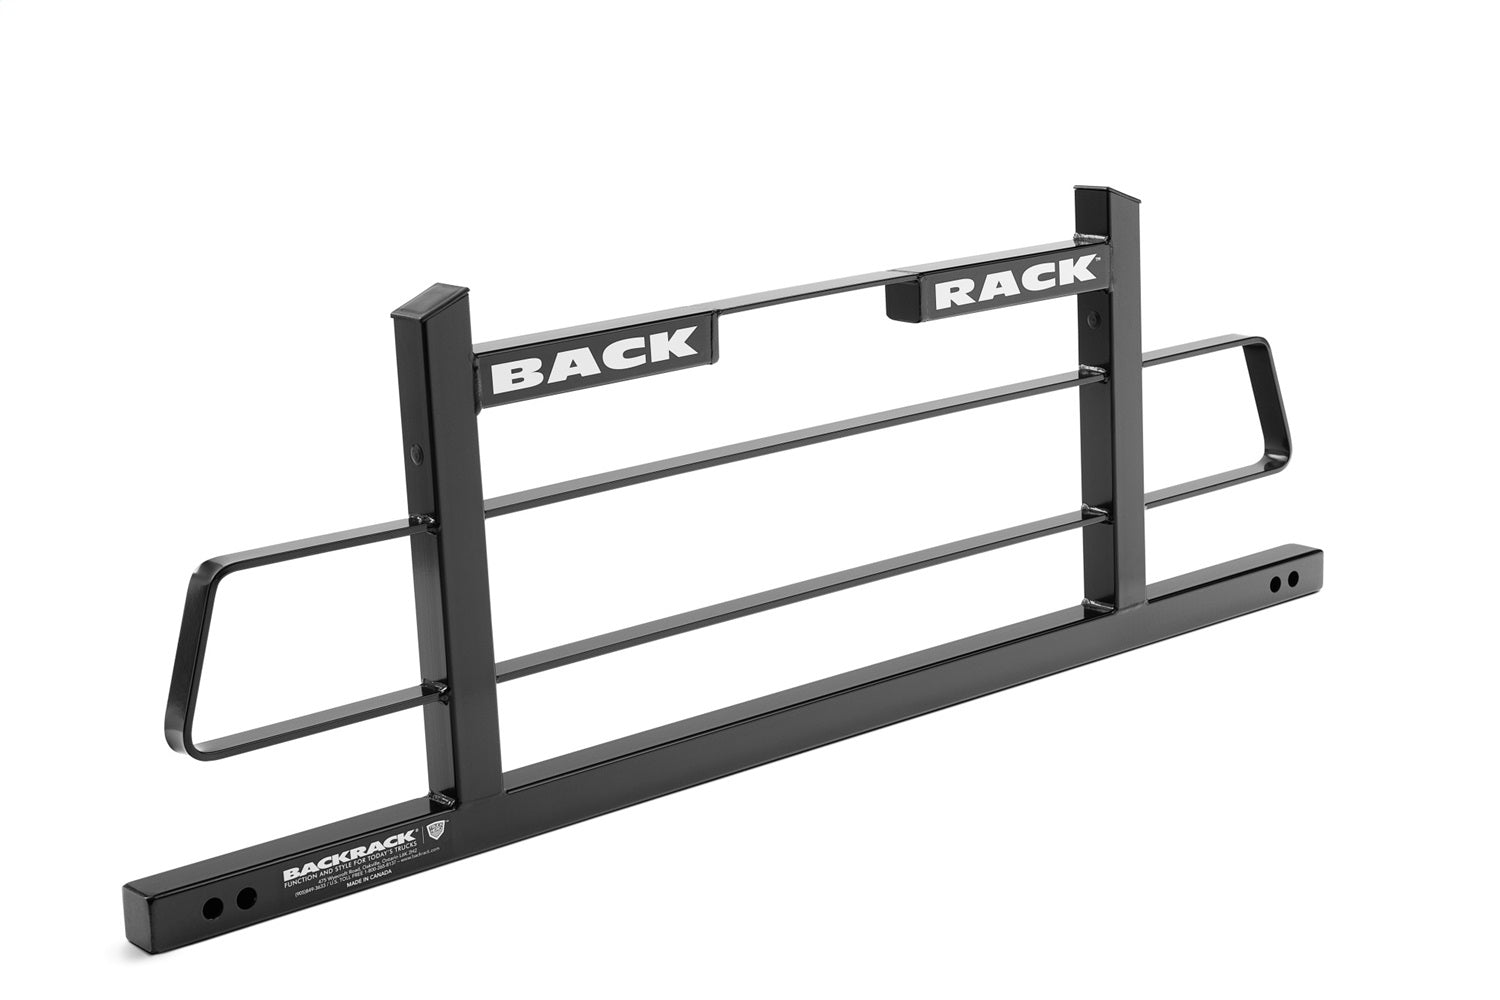 Backrack 15019 Backrack Headache Rack Frame